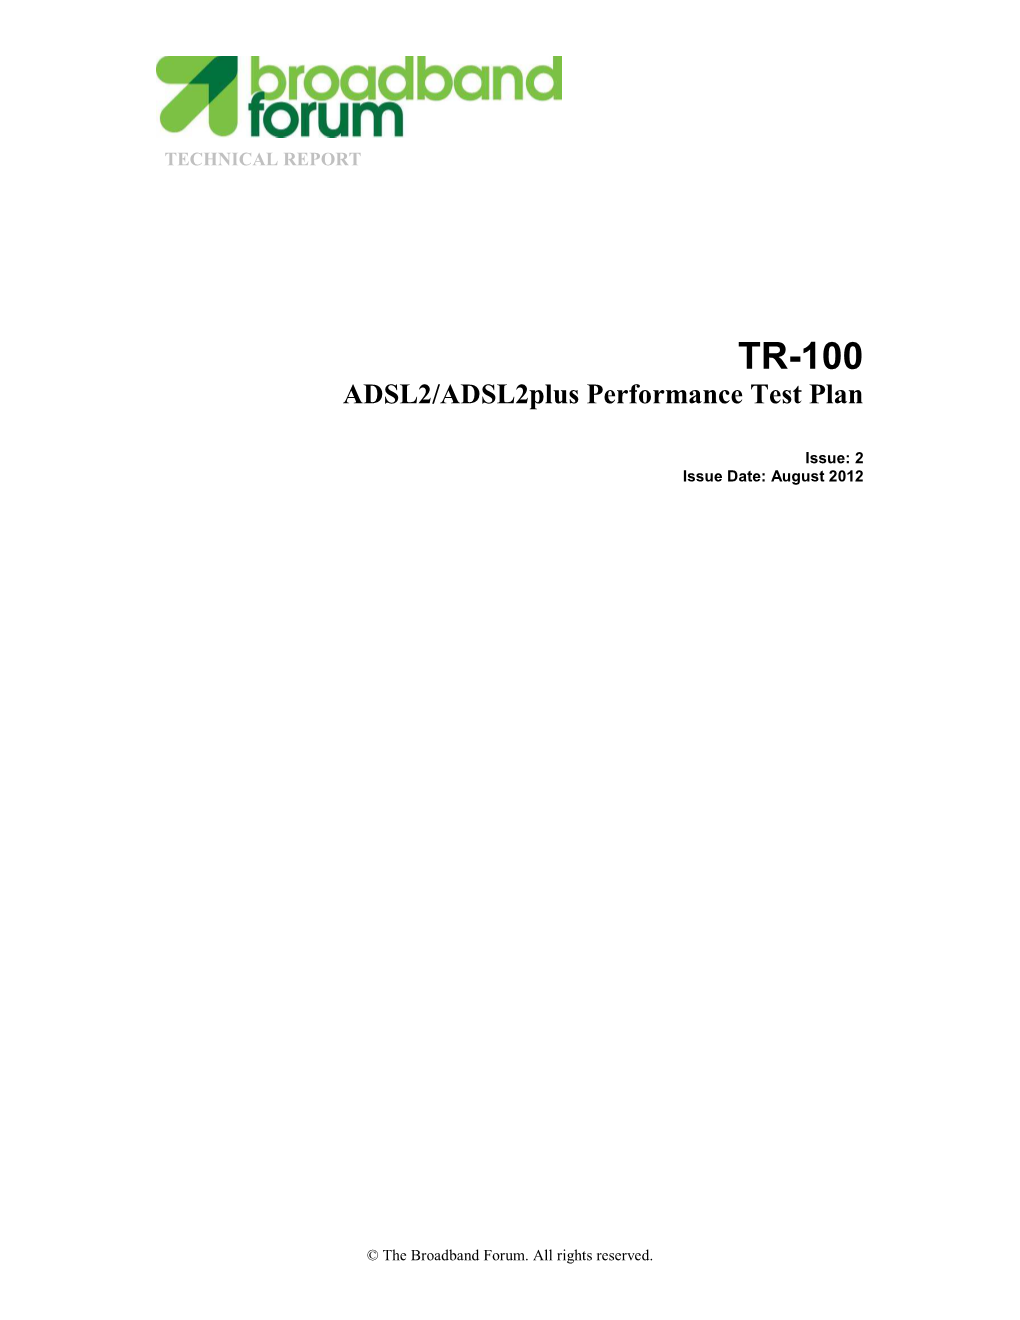 TR-100 Issue 2 ADSL2/Adsl2plus Performance Test Plan